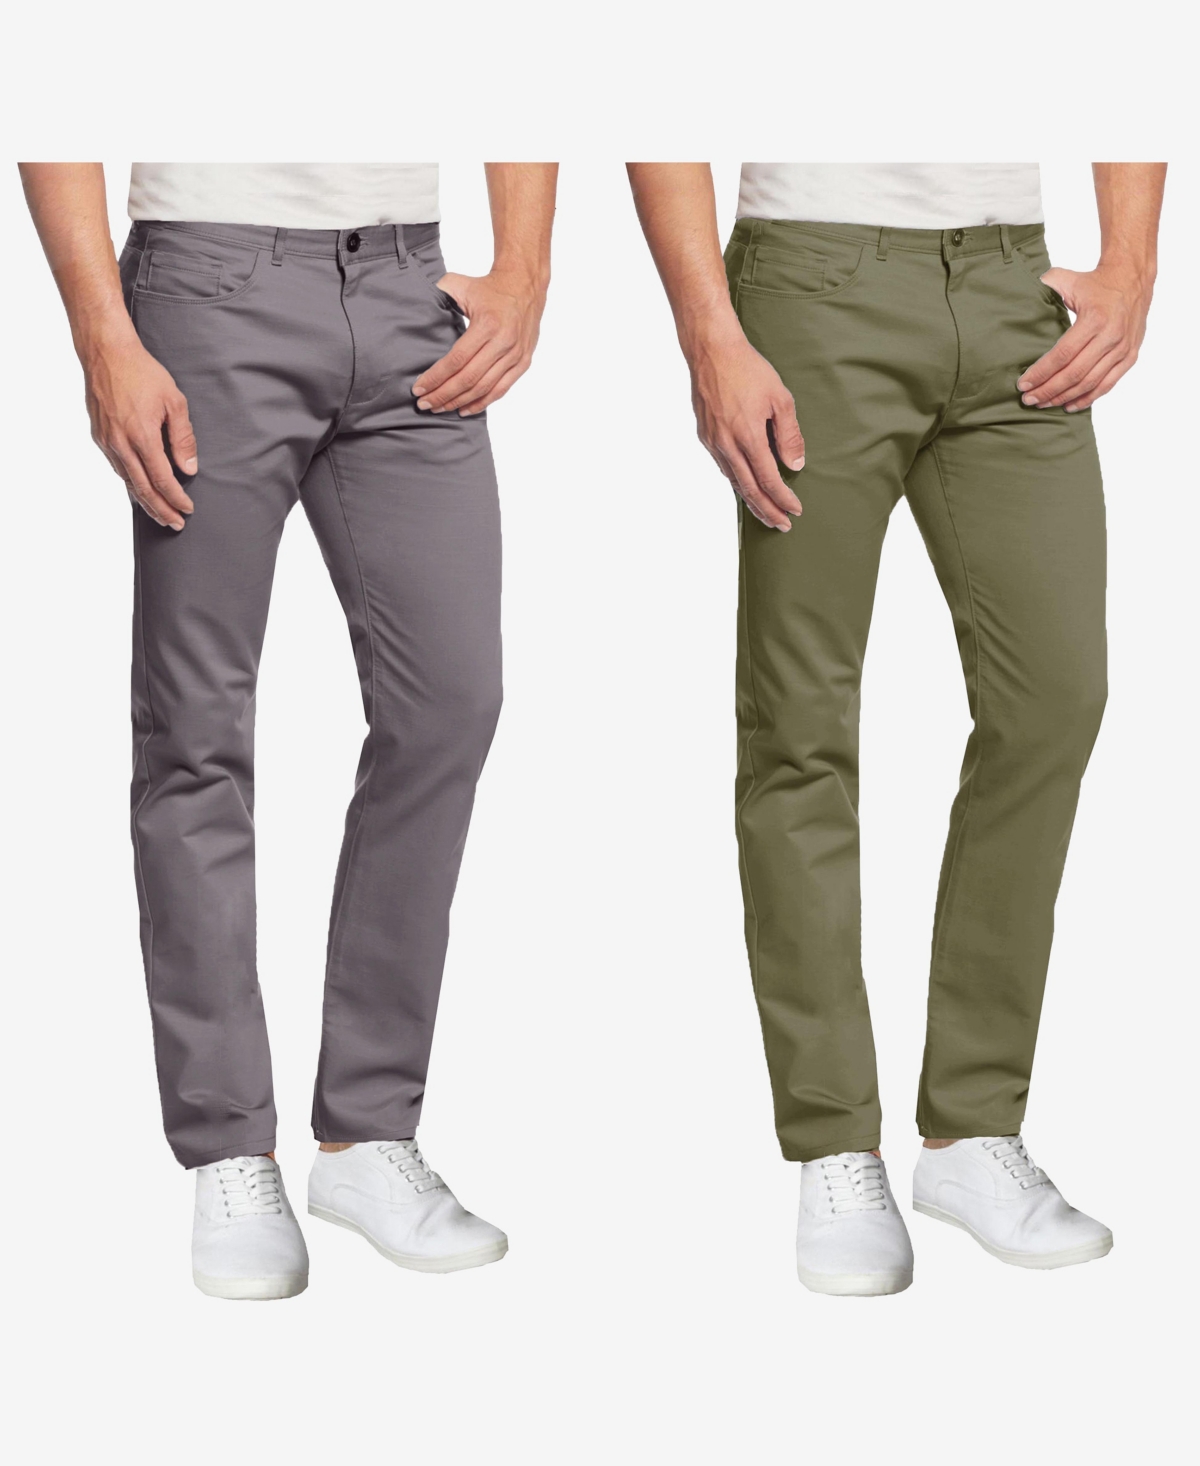 Men's 5-Pocket Ultra-Stretch Skinny Fit Chino Pants, Pack of 2 - Black, Dark Gray